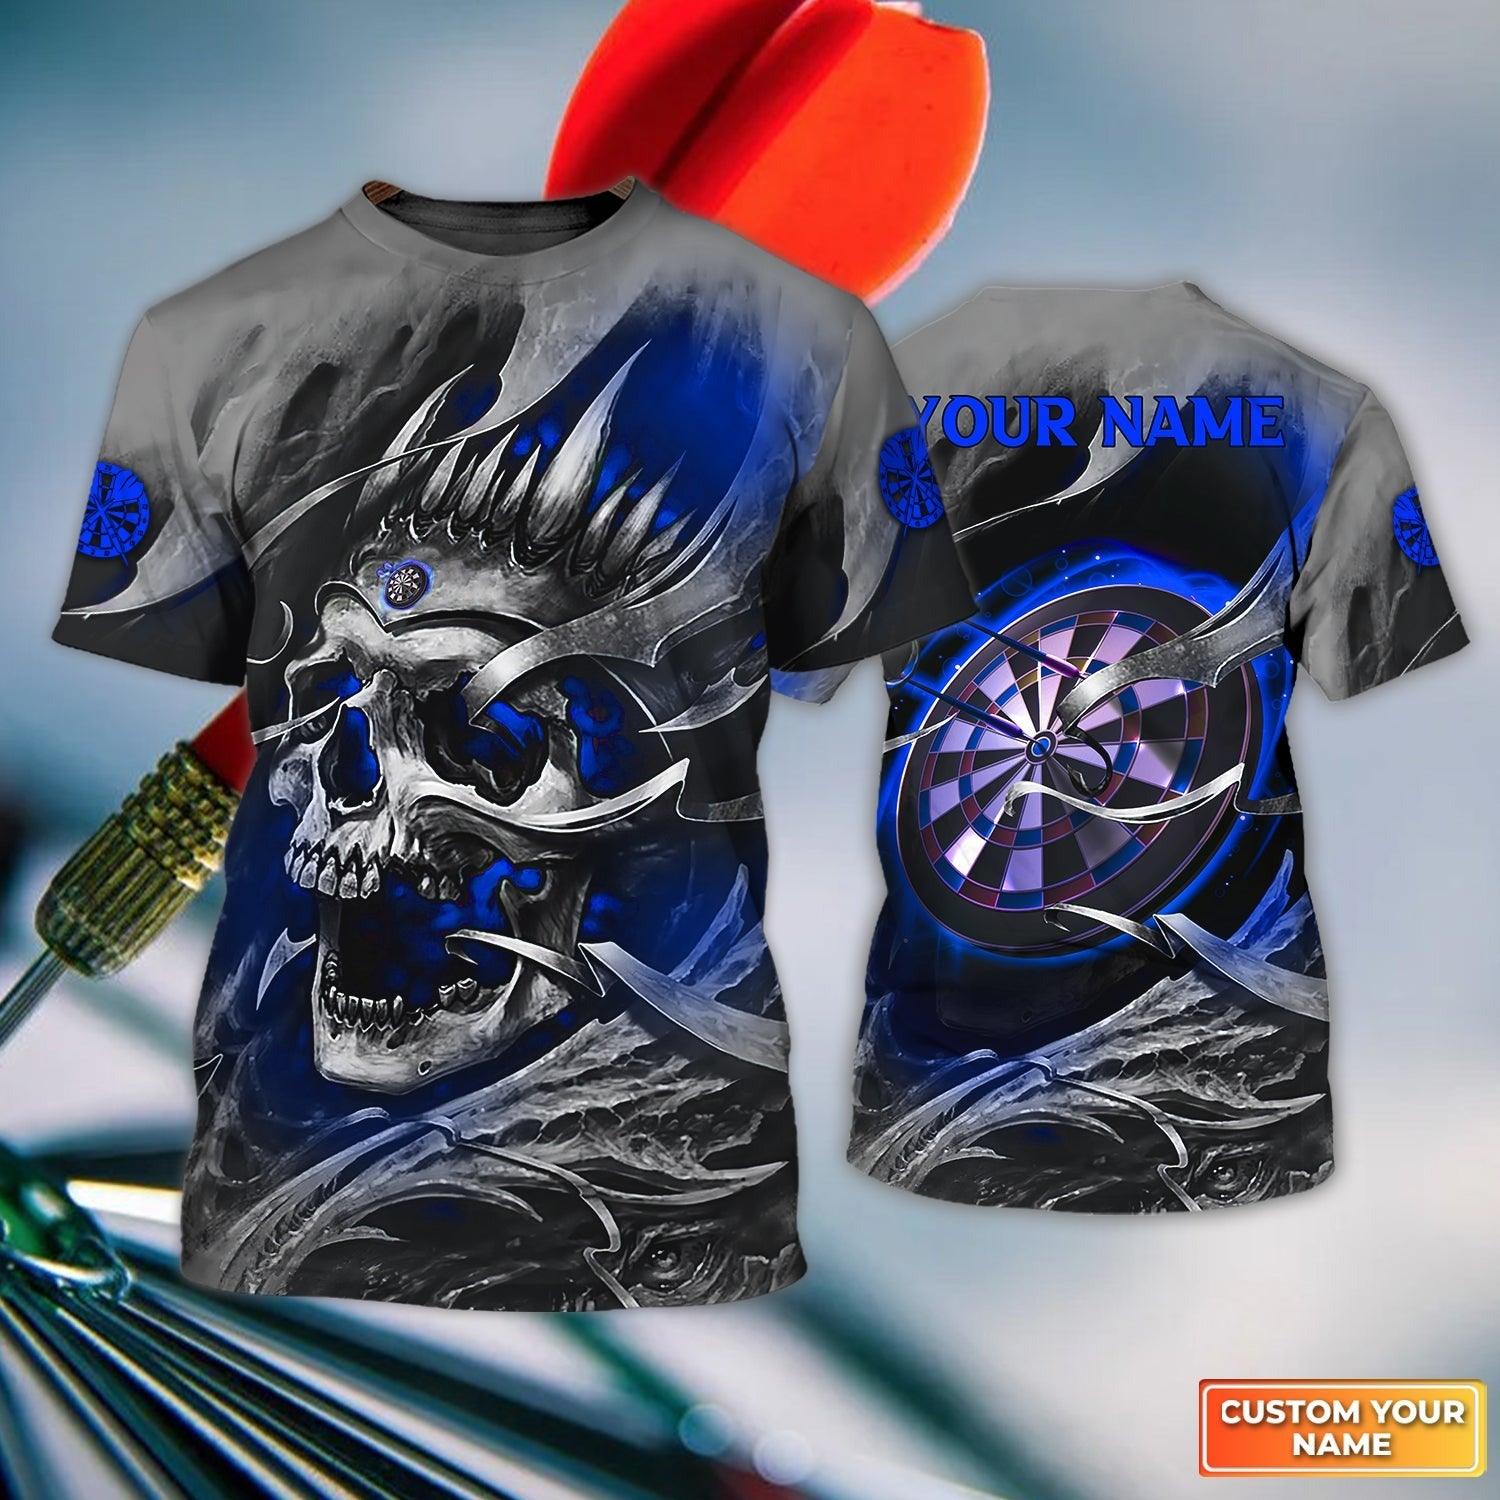 Customized Name Darts T Shirt, Blue Skull Light Dartboard Personalized T Shirt For Men - Gift For Darts Lovers, Darts Player - Amzanimalsgift